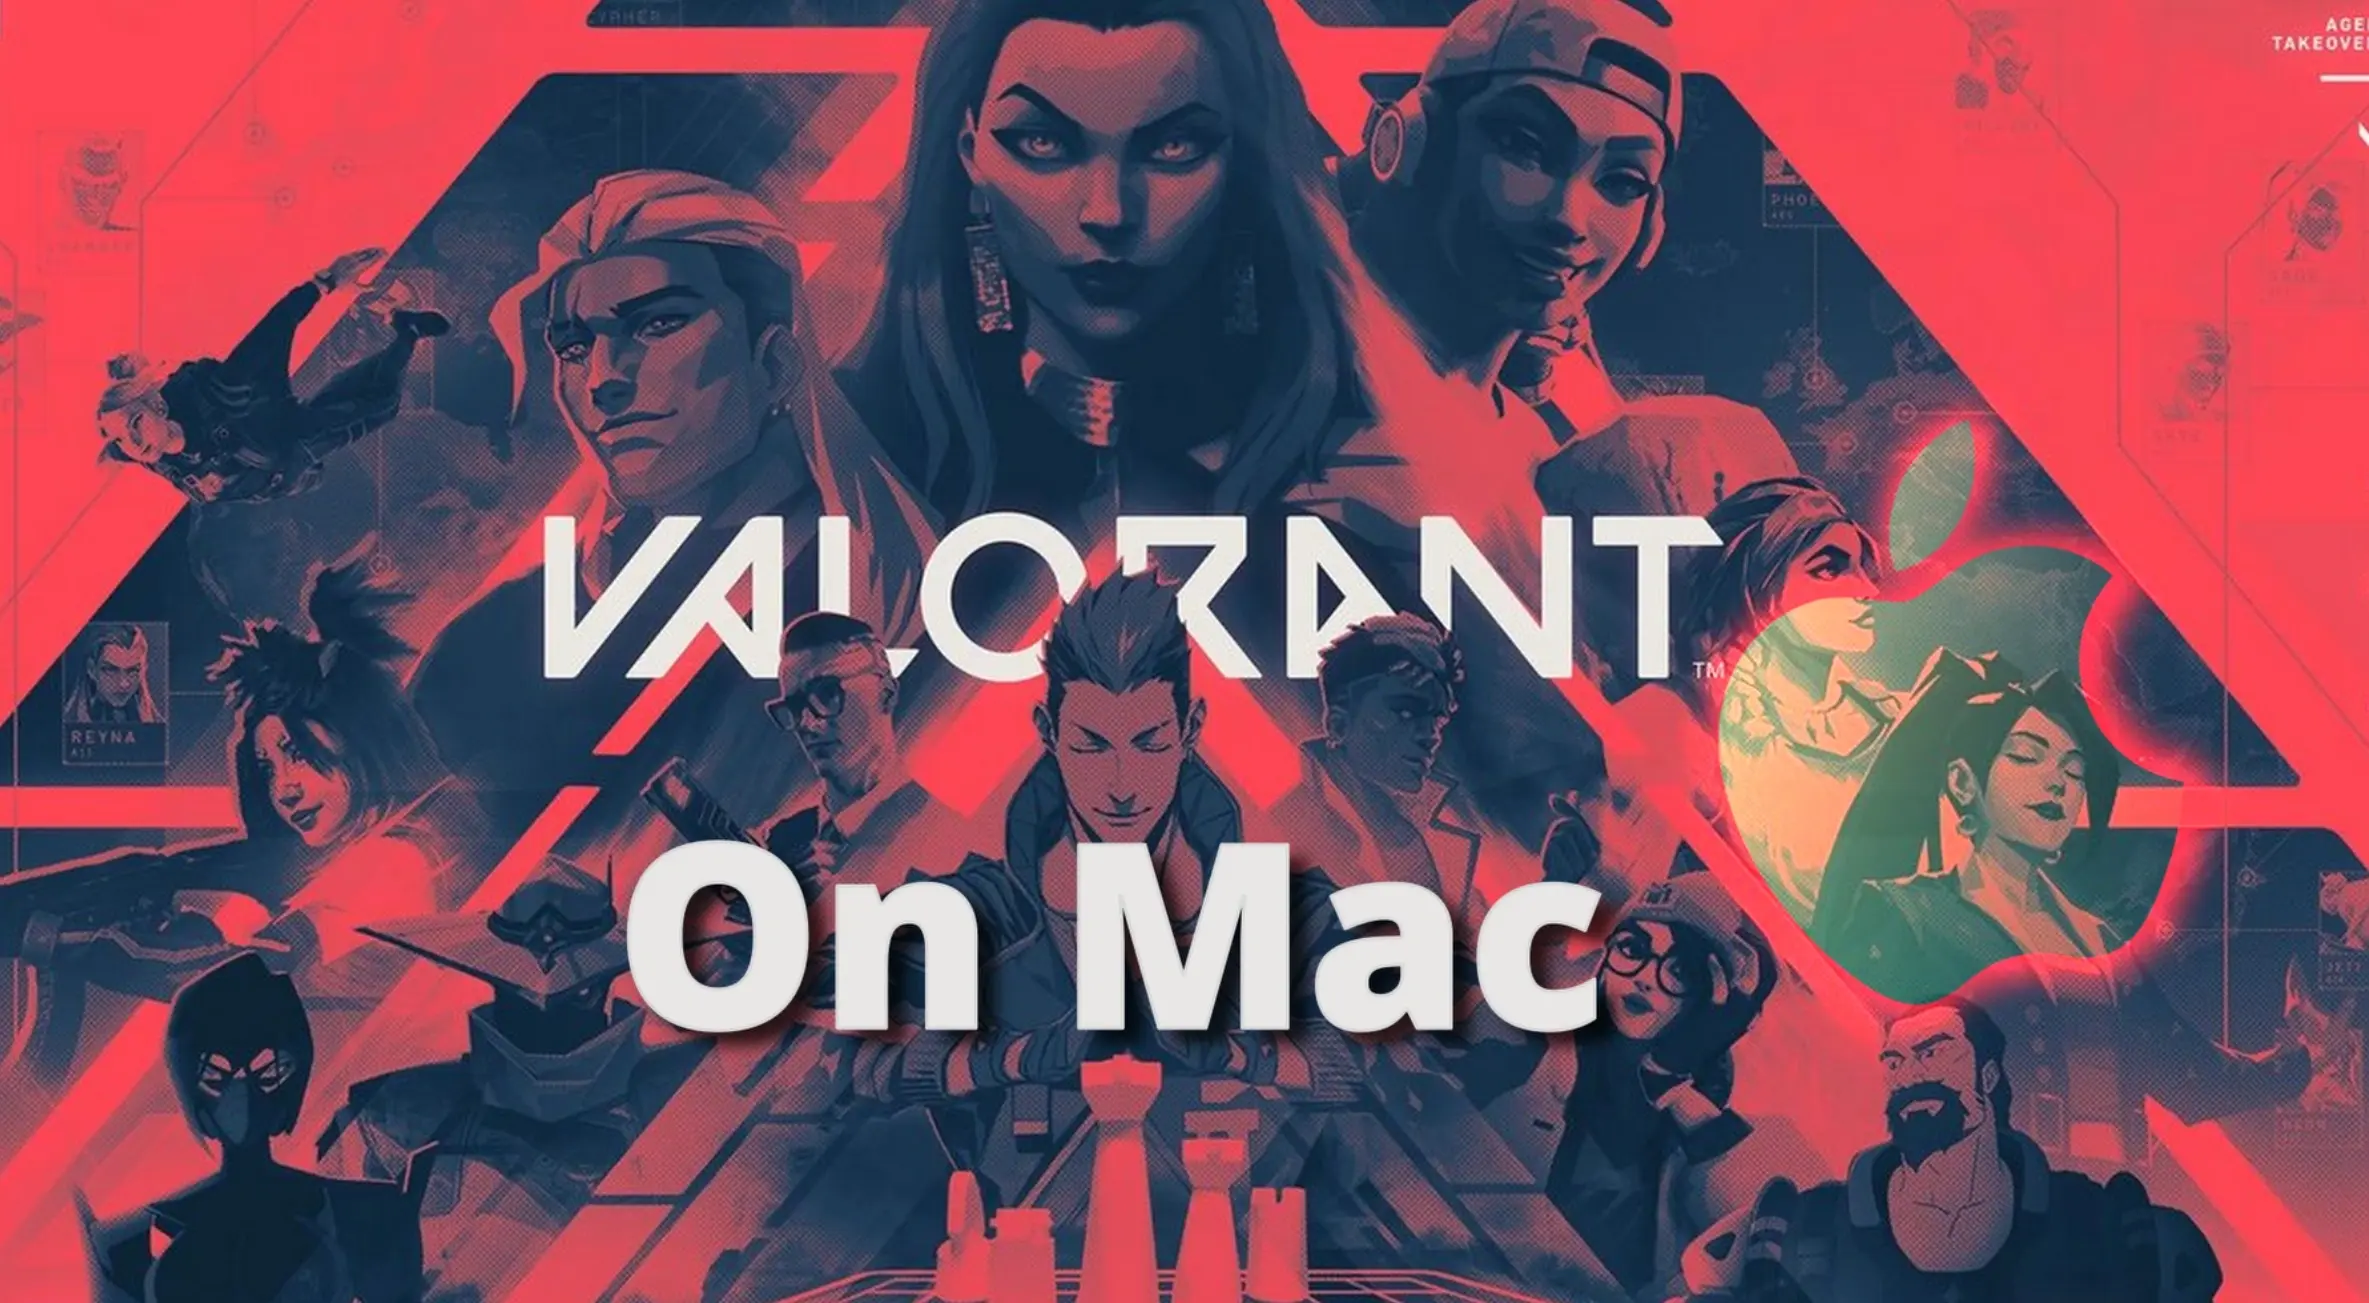 Play Valorant on Mac